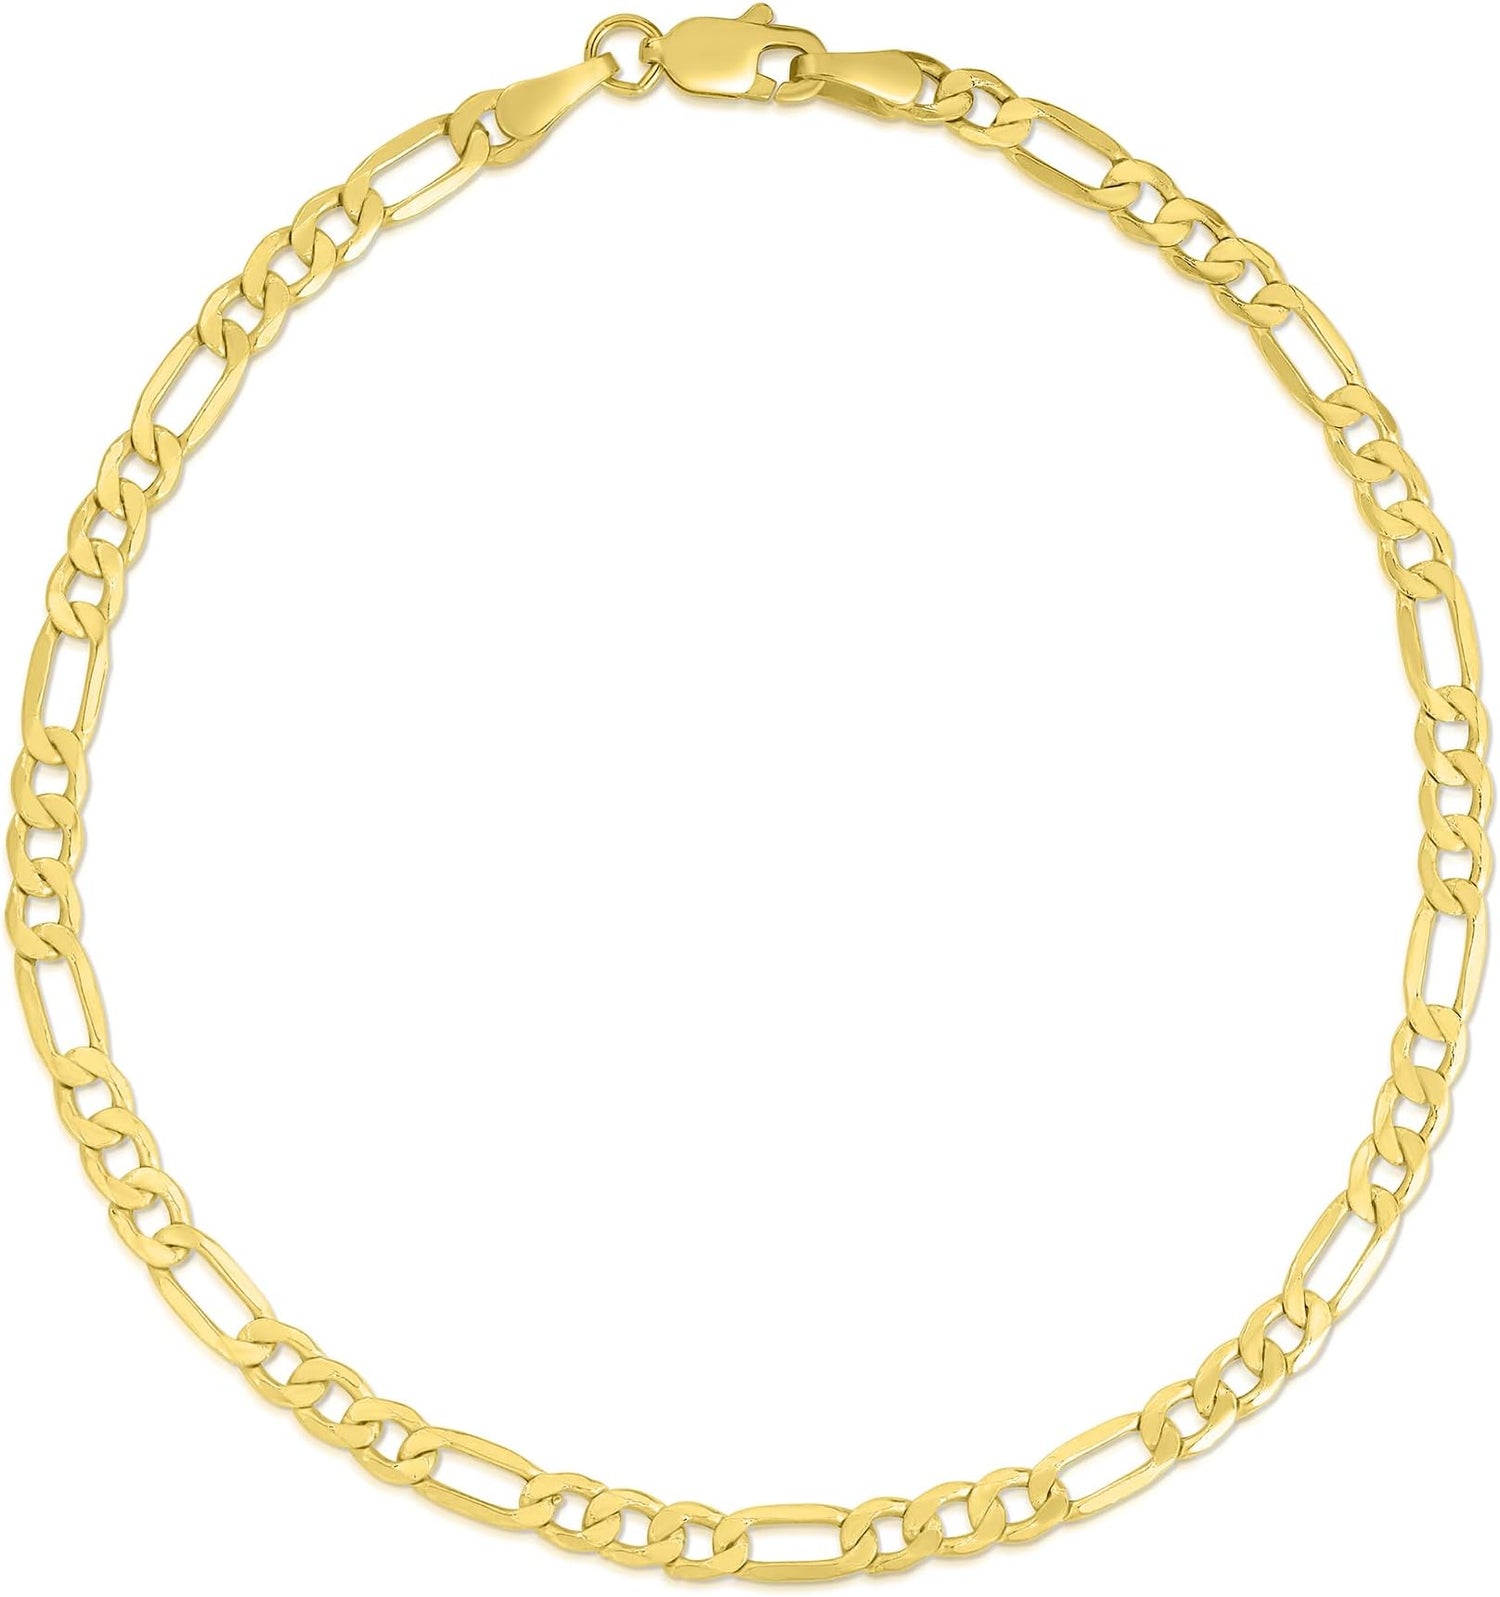 10k Yellow Gold 2.5mm Lite Figaro Chain Link Bracelet or Anklet